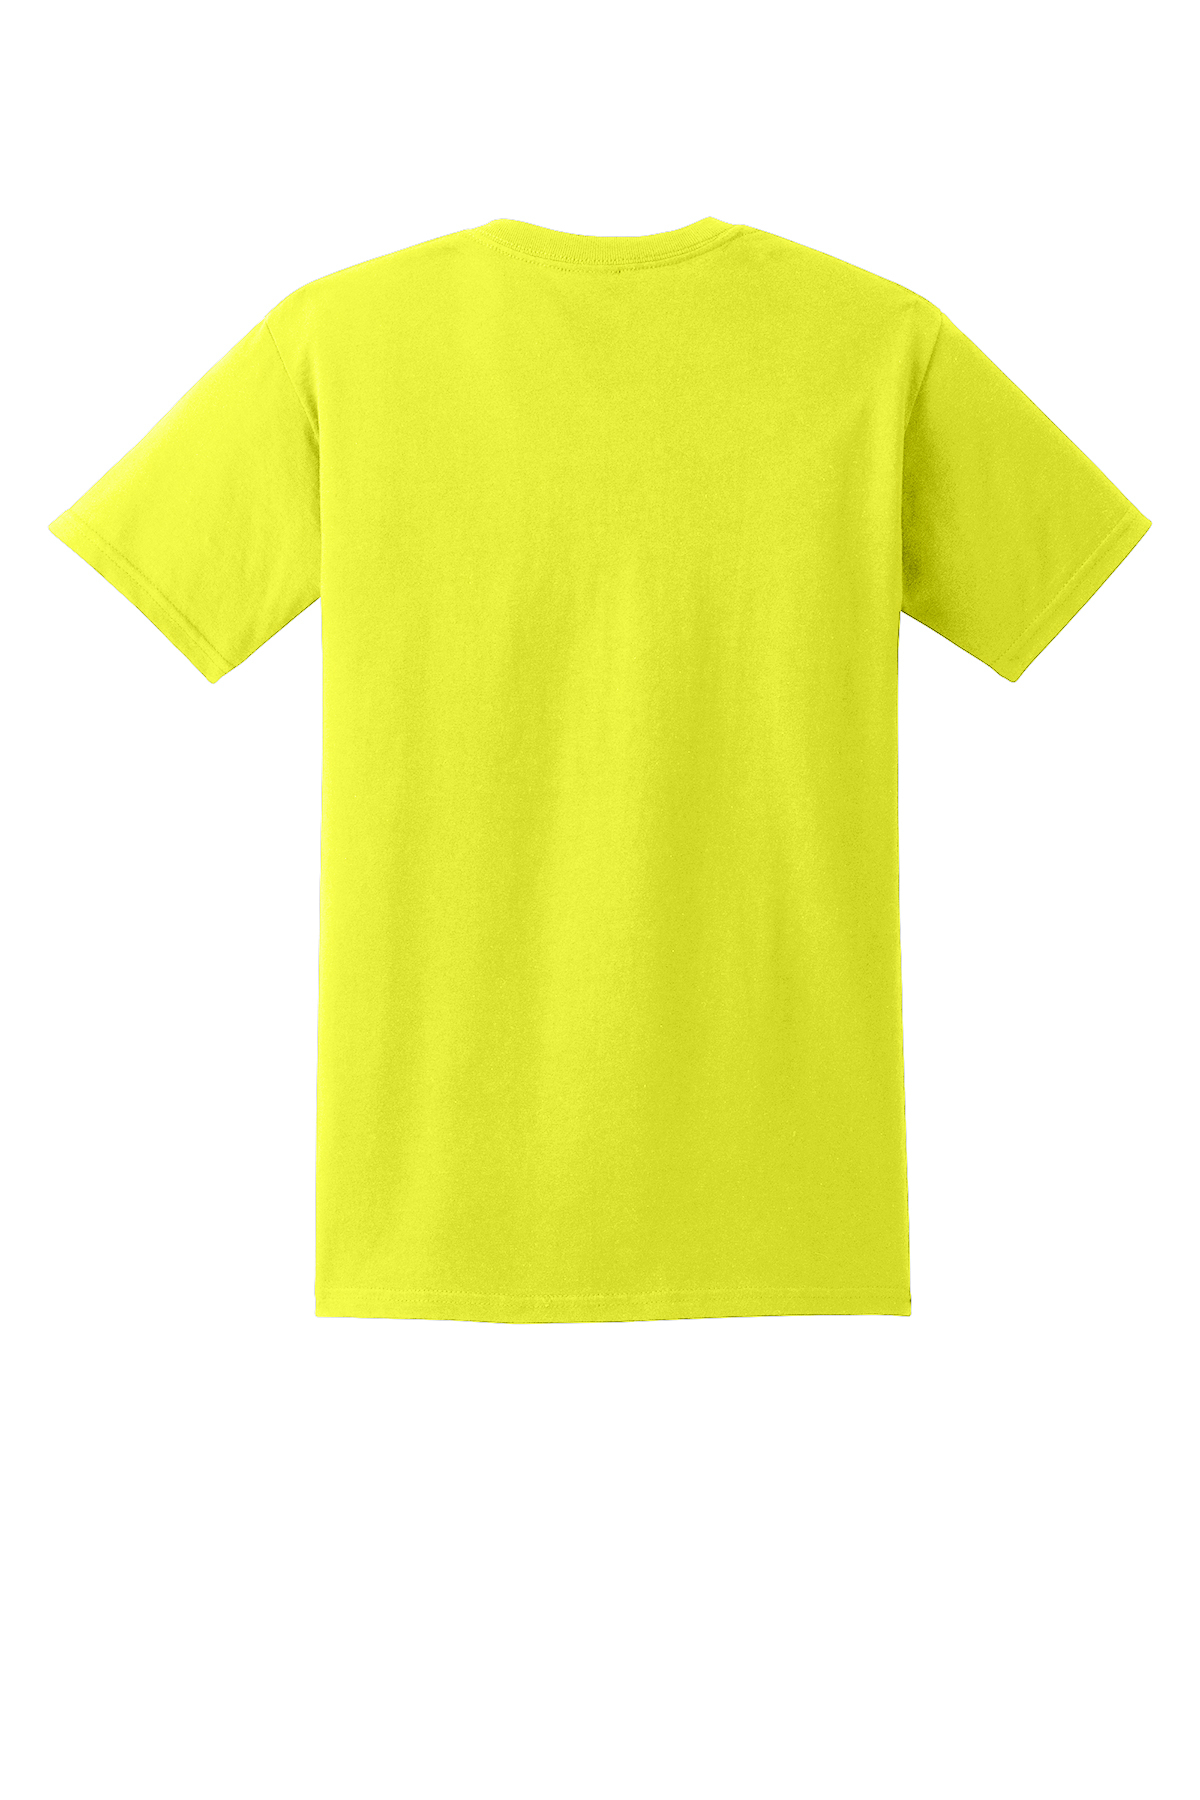 Gildan - Ultra Cotton 100% US Cotton T-Shirt with Pocket | Product ...